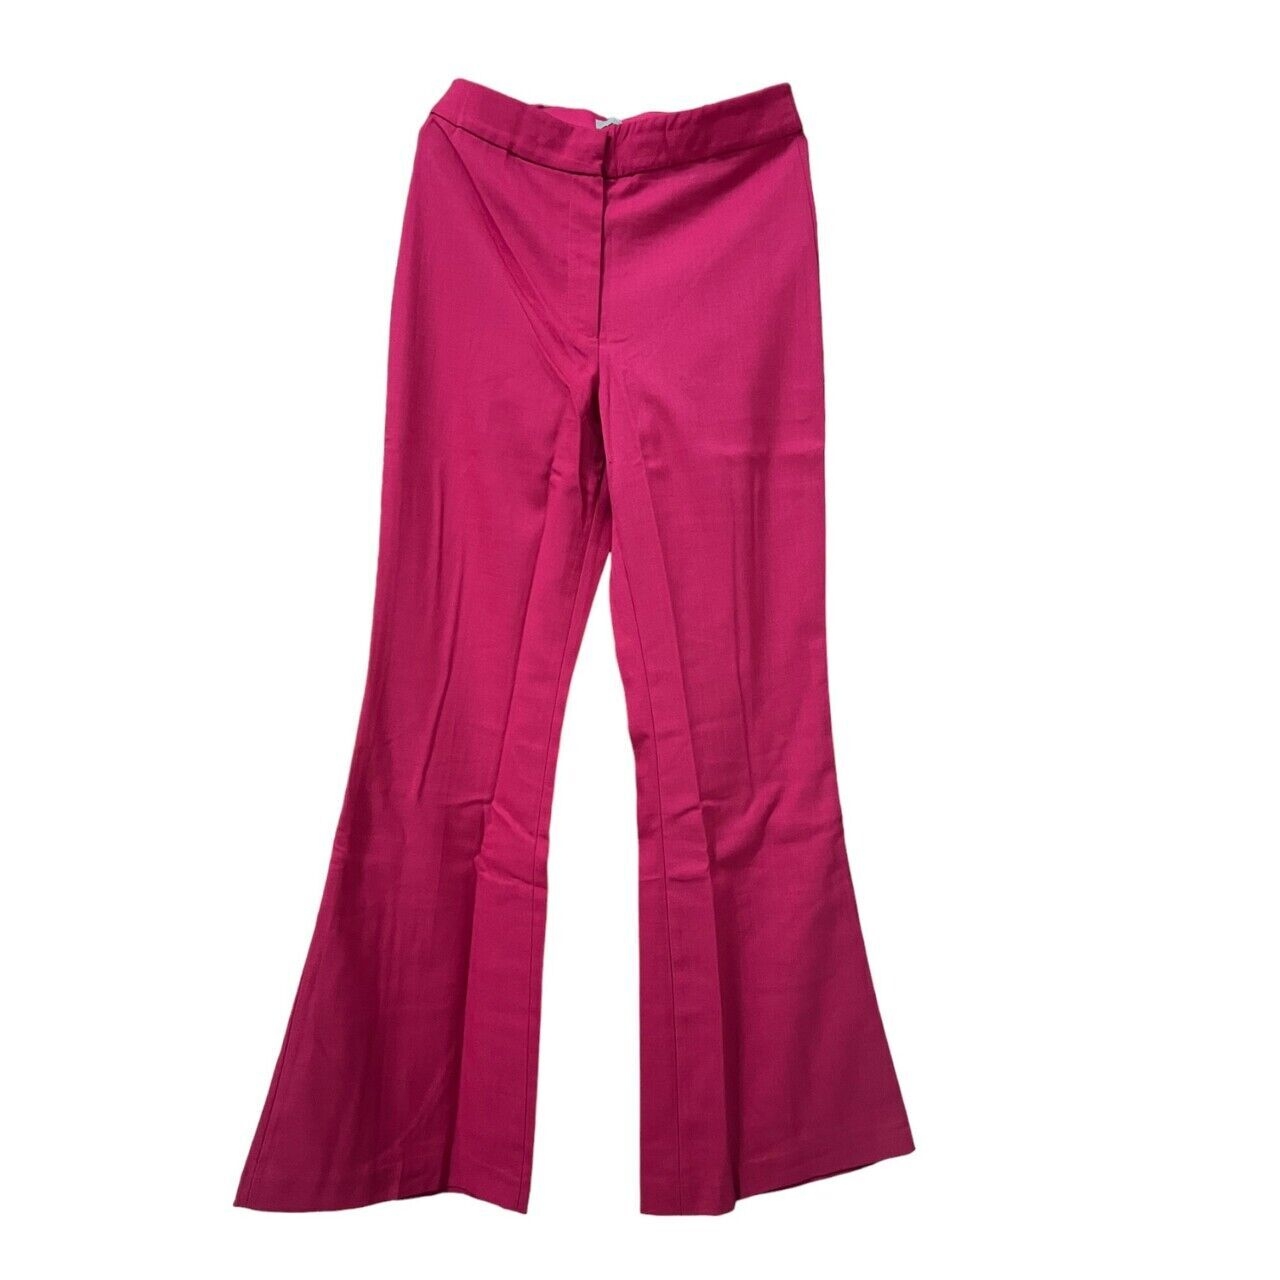 H&M Pink Long Pants